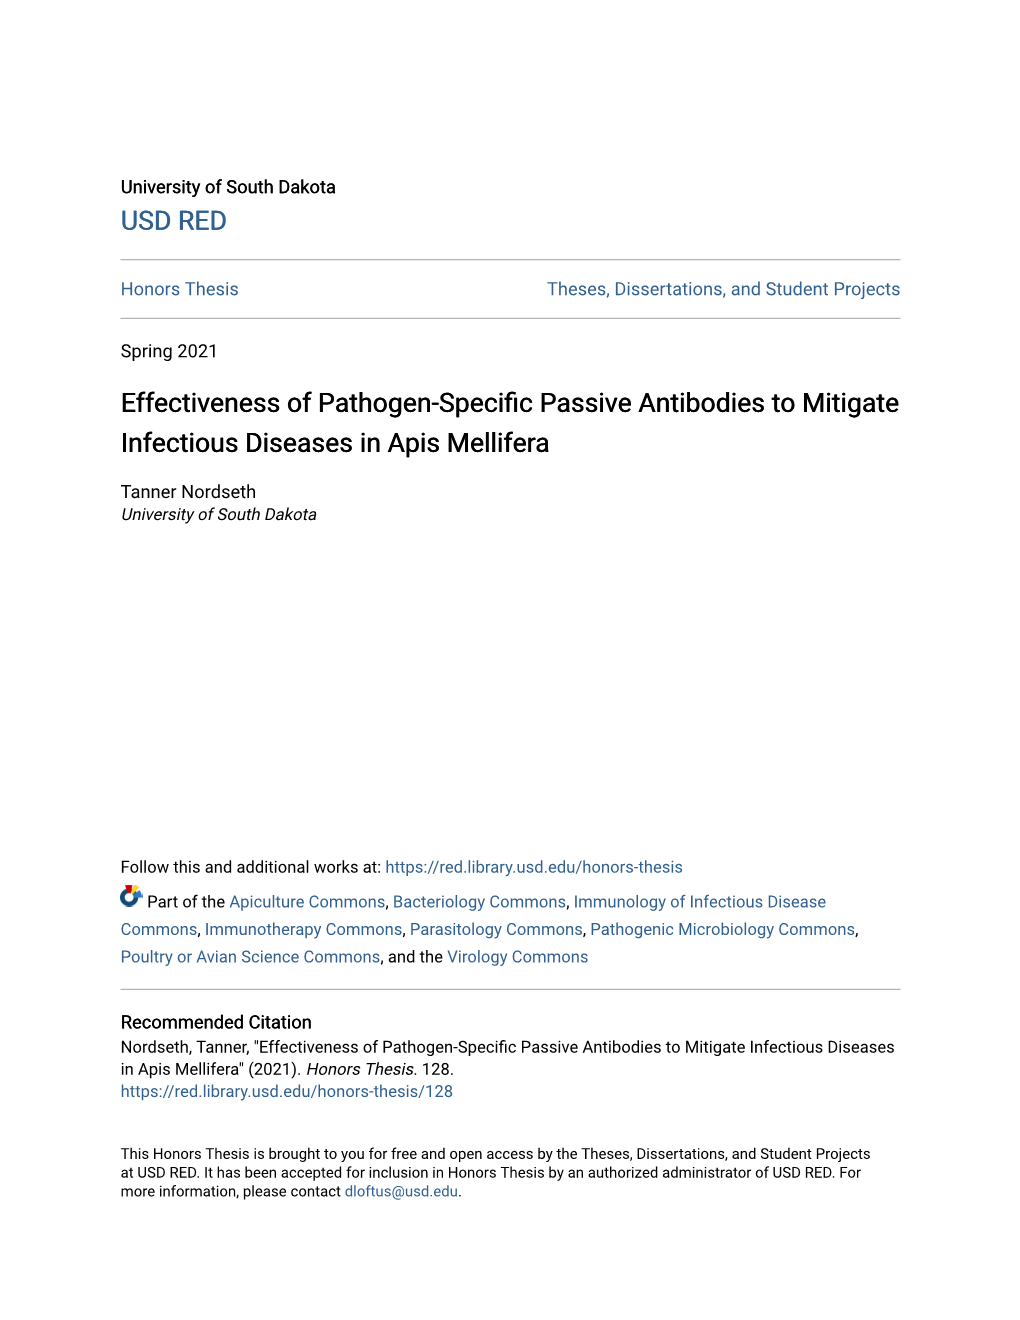 Effectiveness of Pathogen-Specific Passive Antibodies to Mitigate Infectious Diseases in Apis Mellifera" (2021)